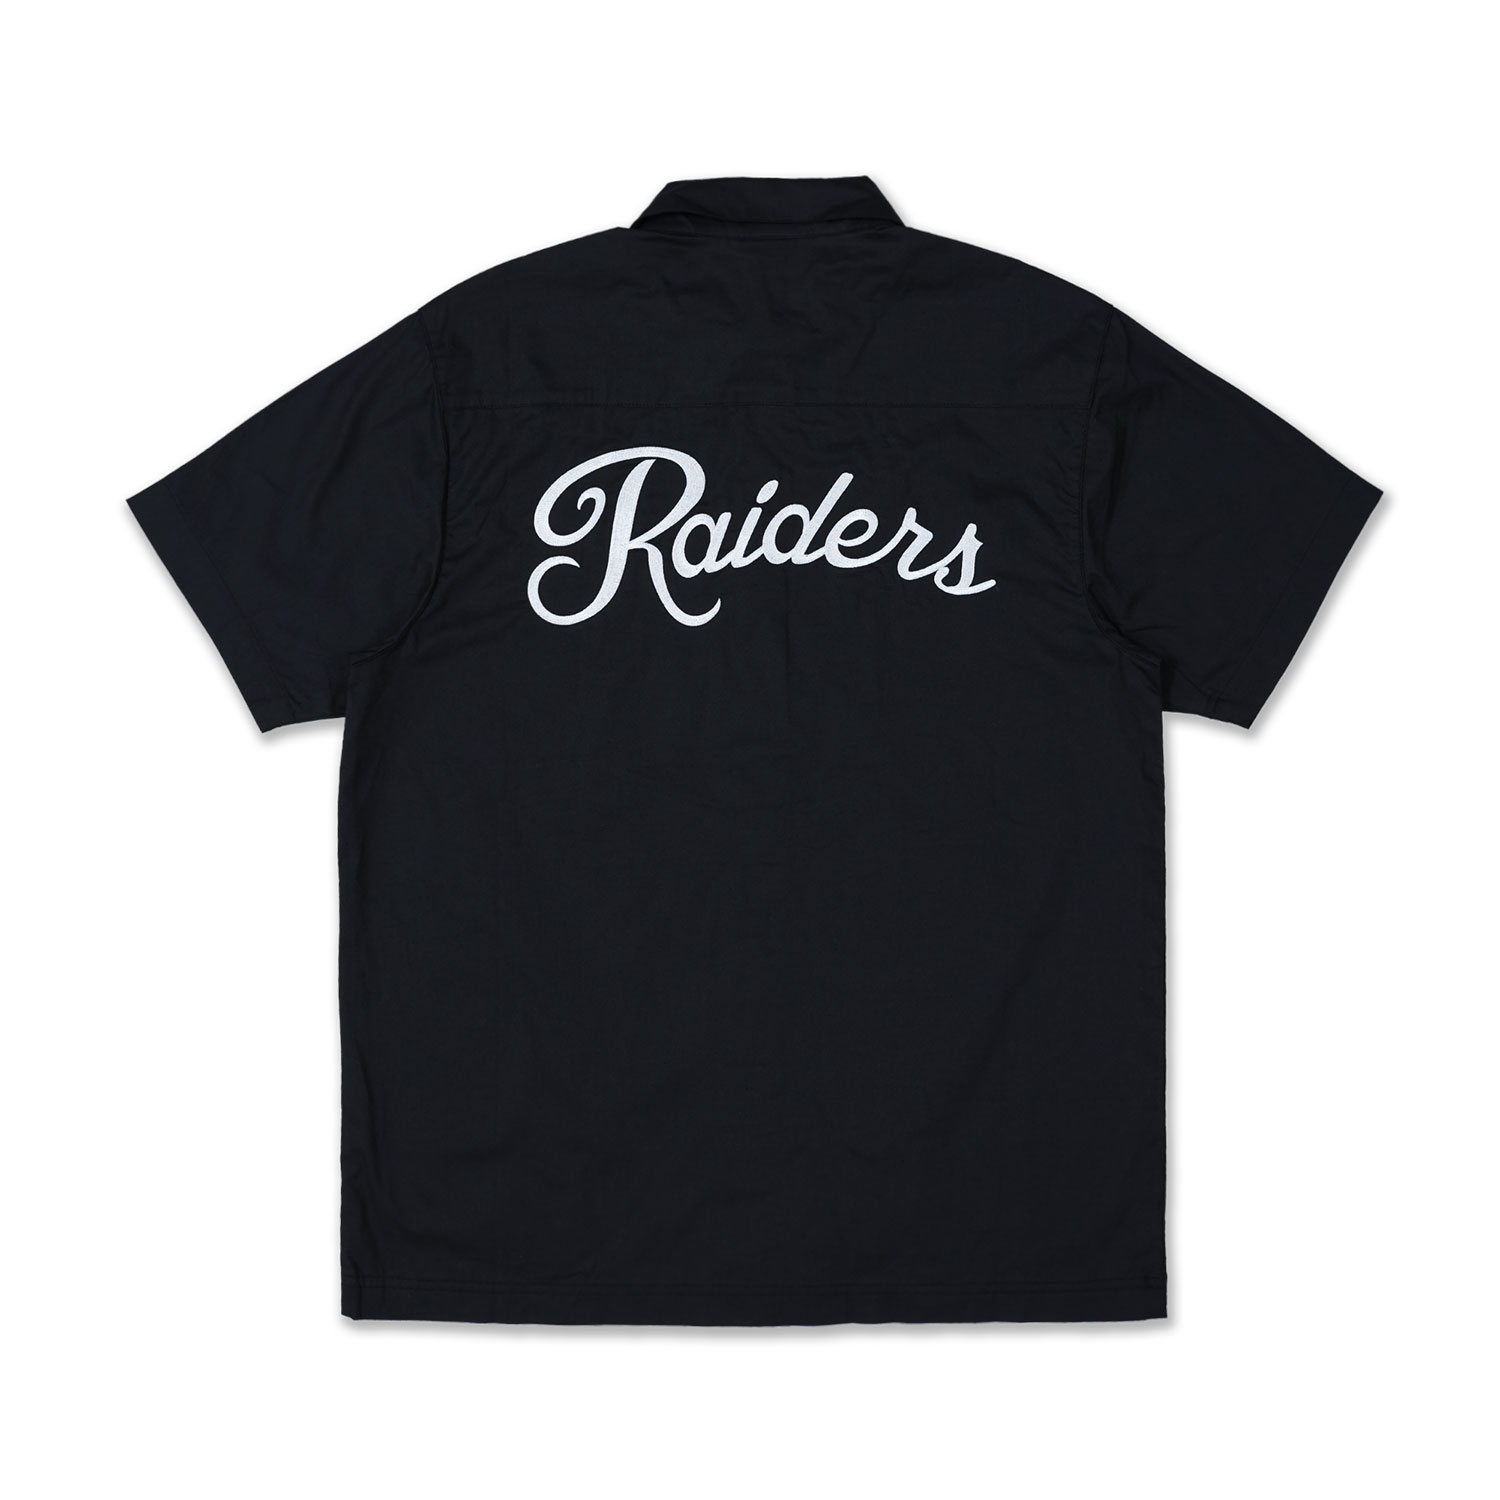 Las Vegas Raiders Black Woven Short Sleeve Shirt